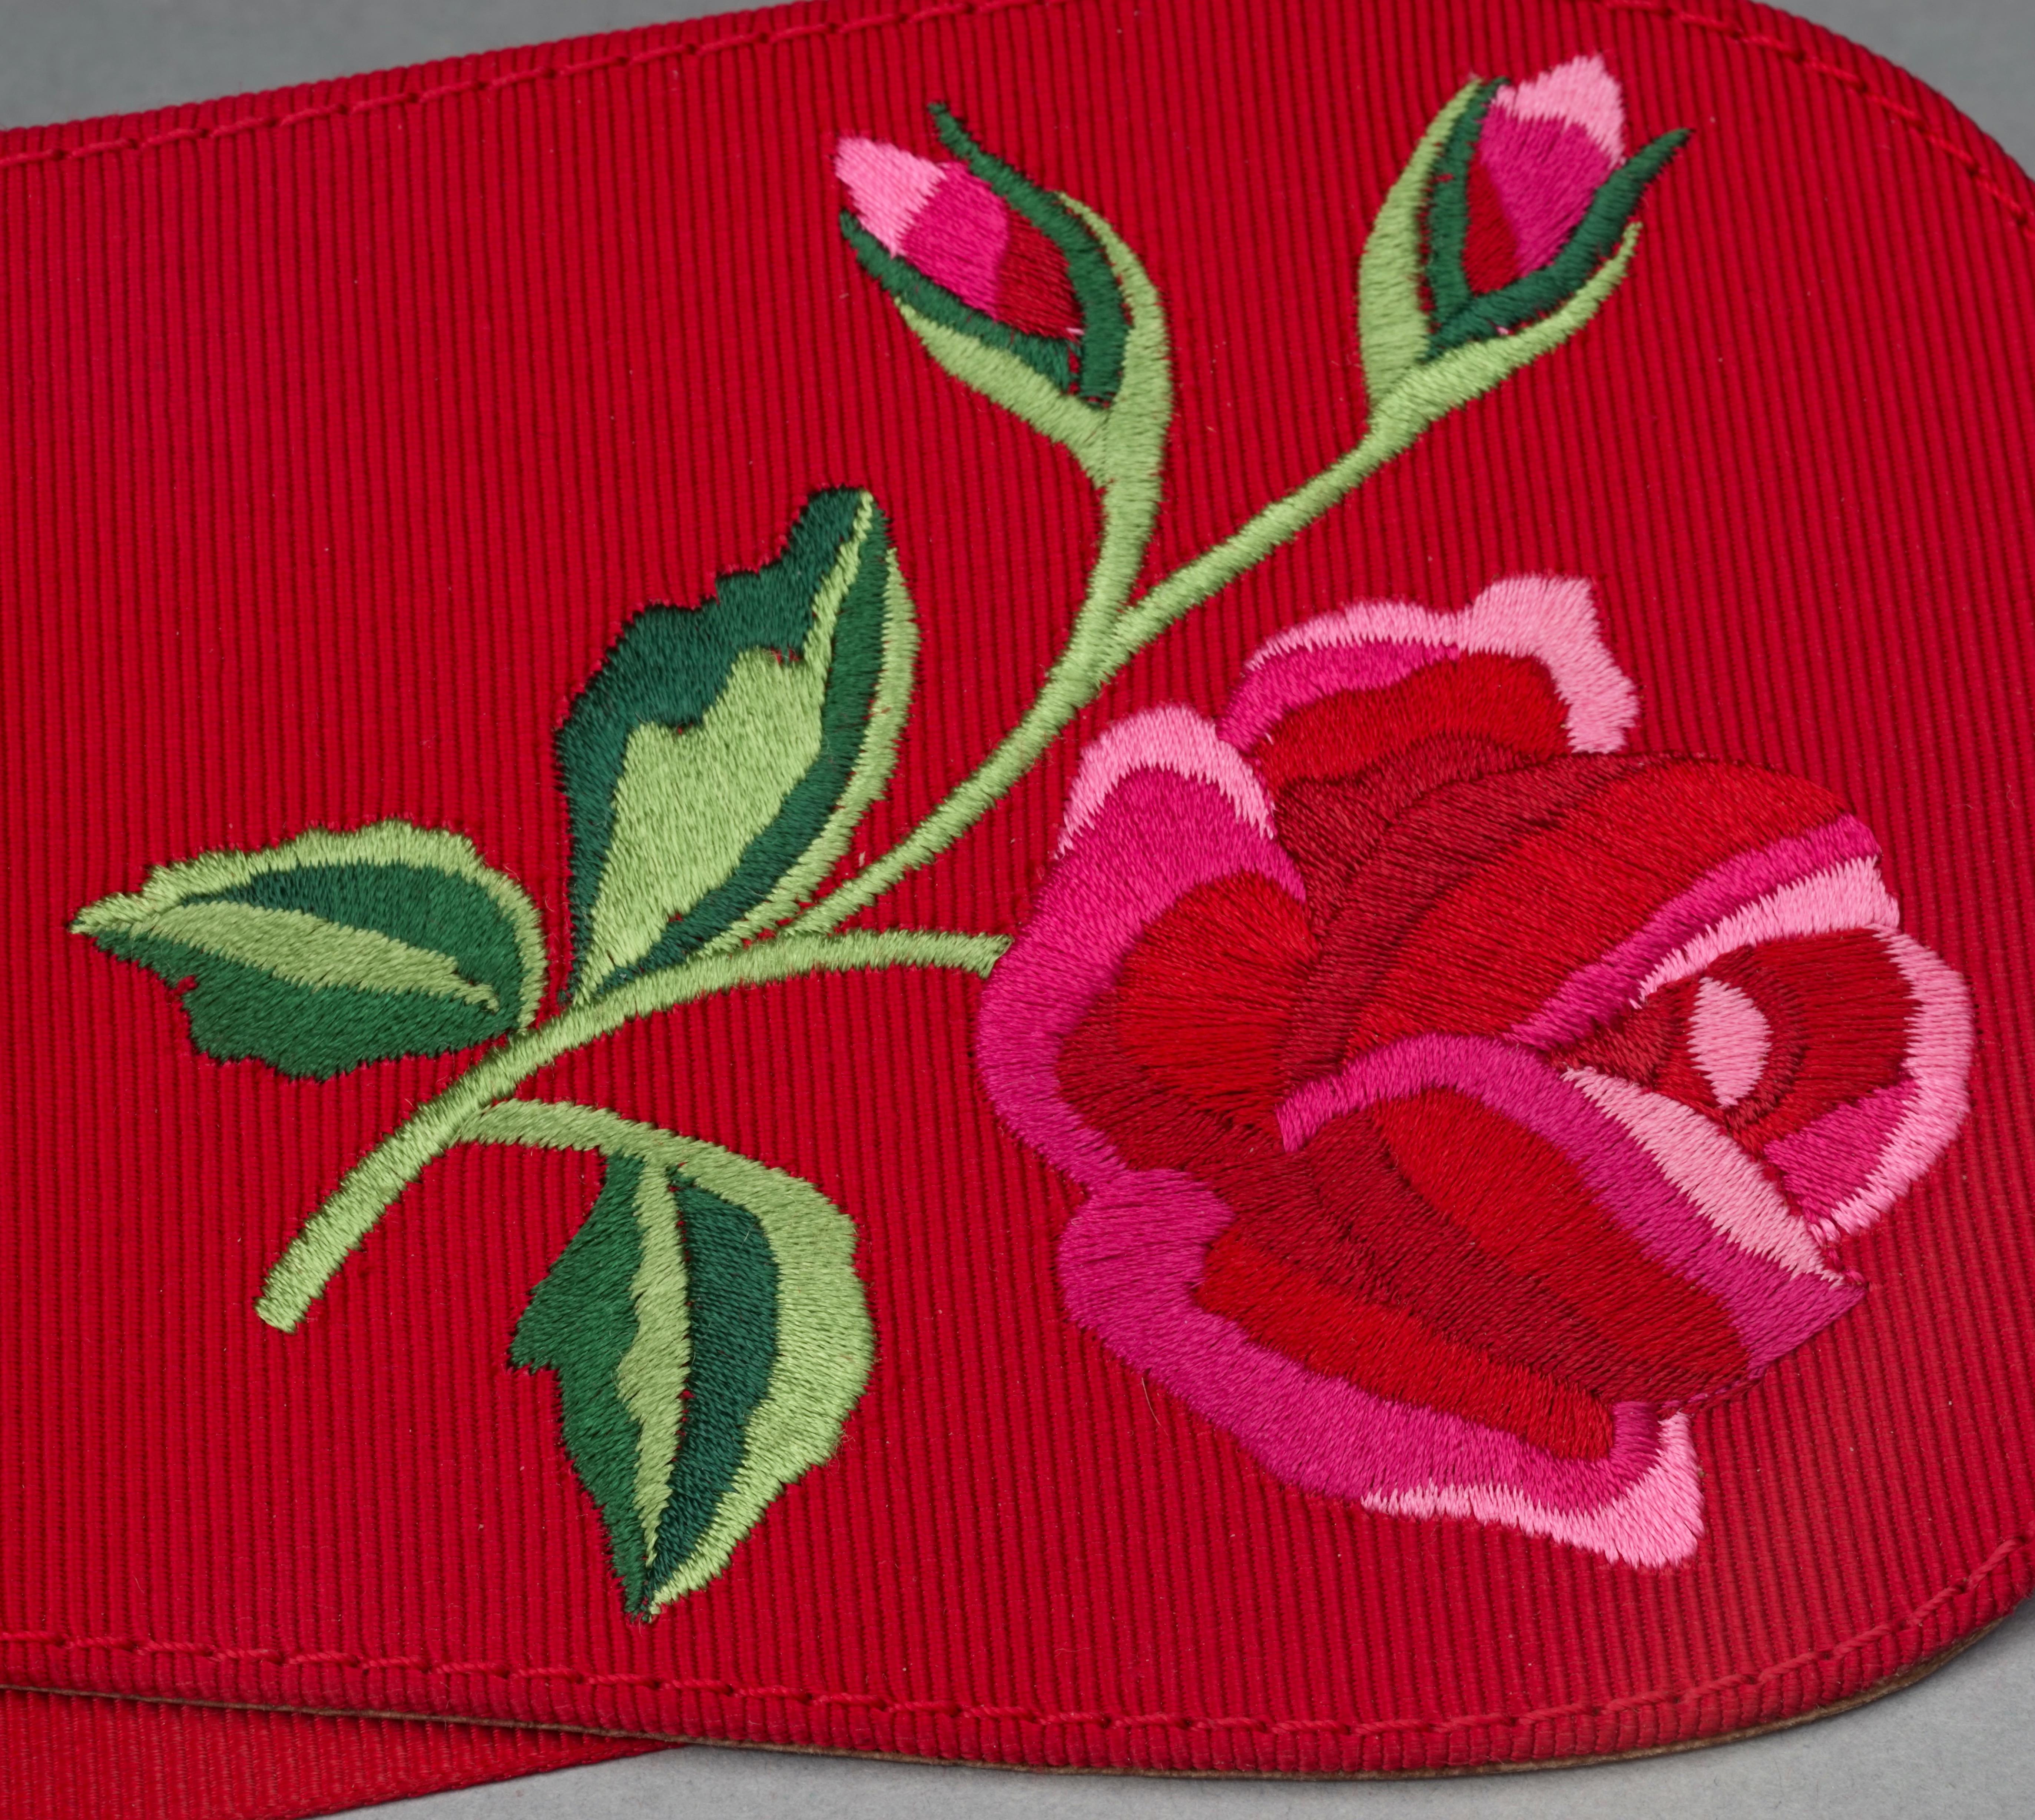 Vintage YVES SAINT LAURENT Ysl Flower Embroidered Grosgrain Ribbon Red Belt For Sale 1